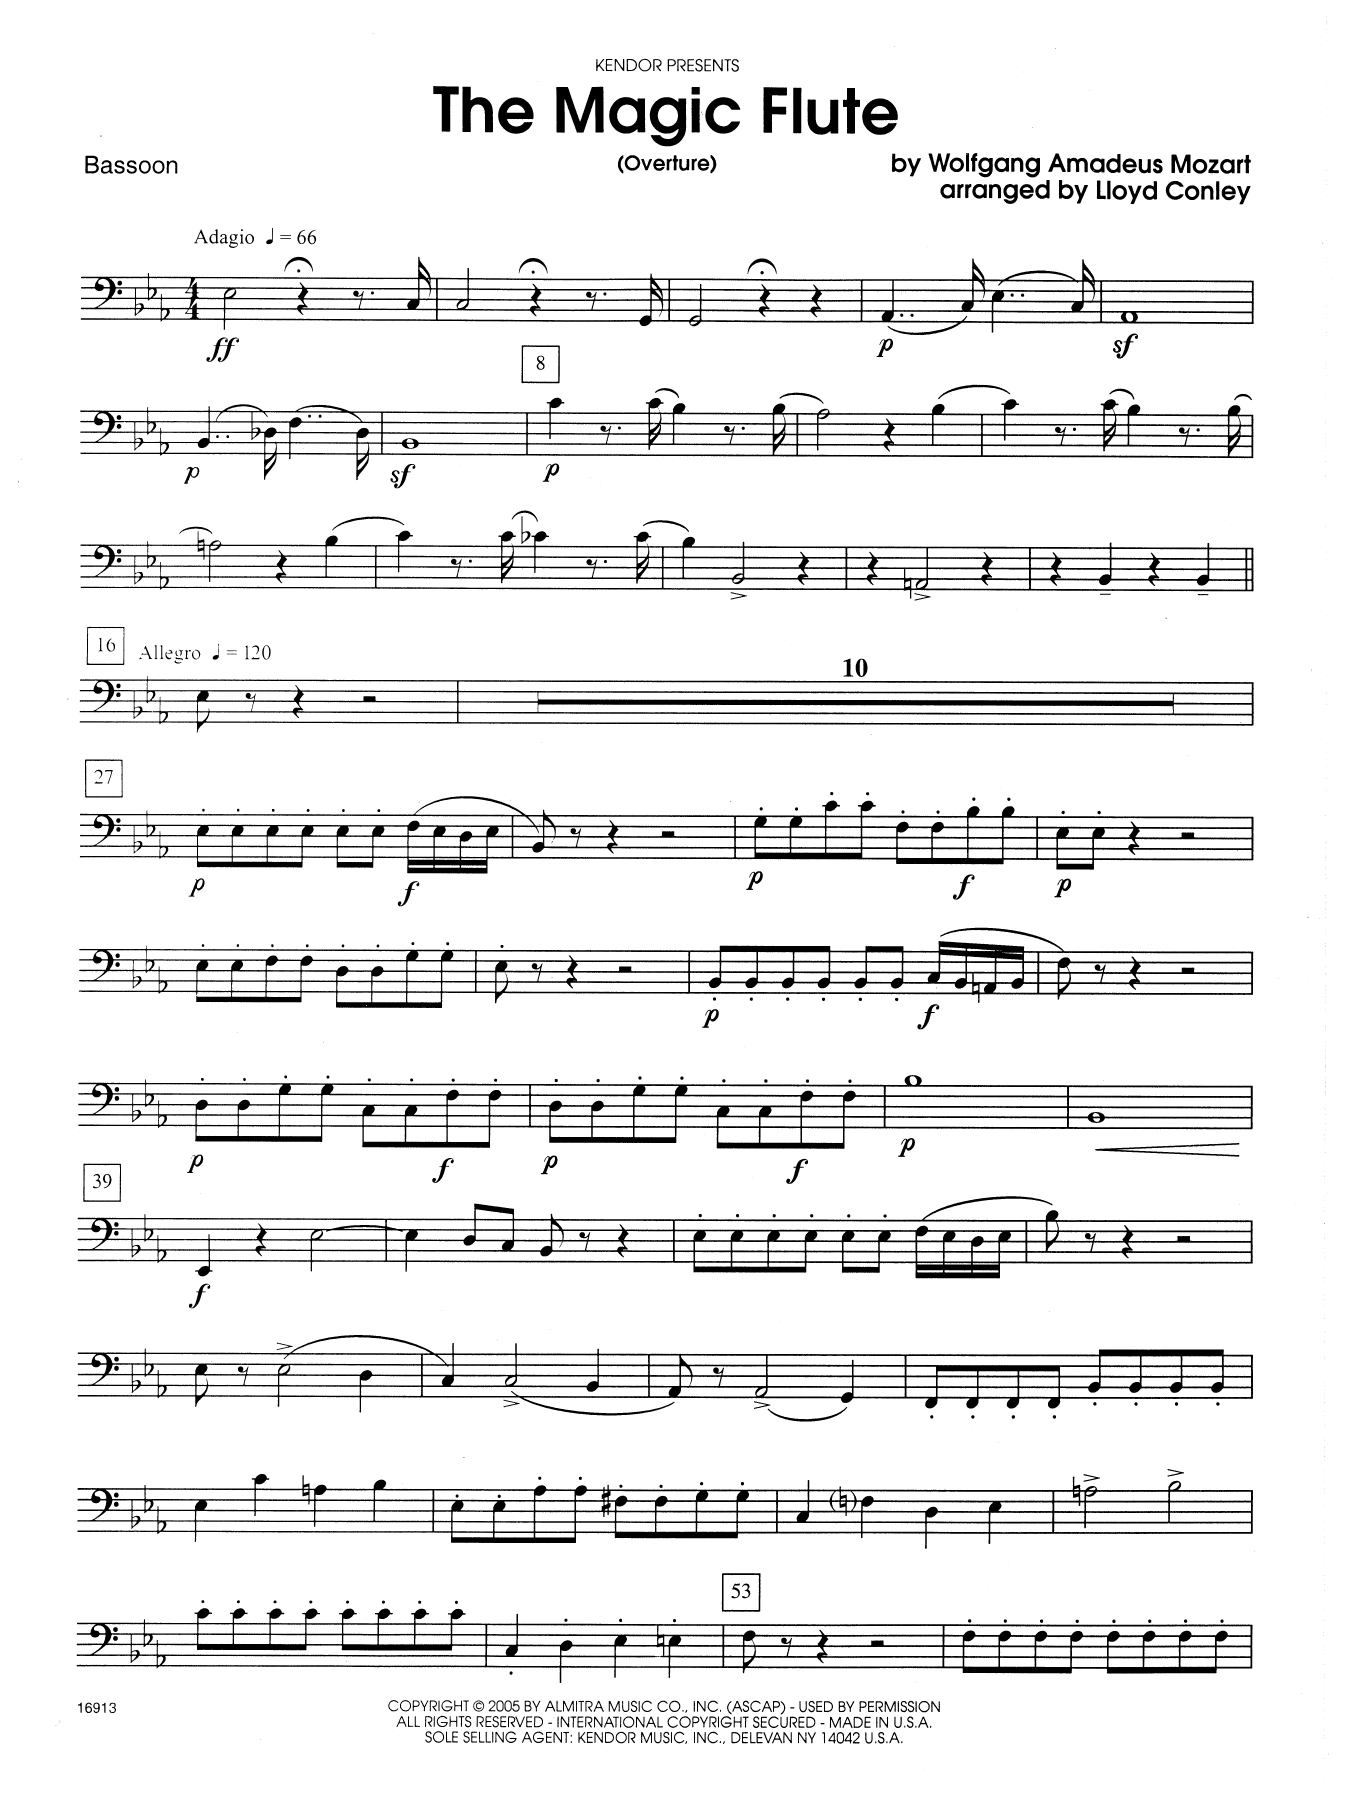 Download Lloyd Conley The Magic Flute (Overture) - Bassoon Sheet Music